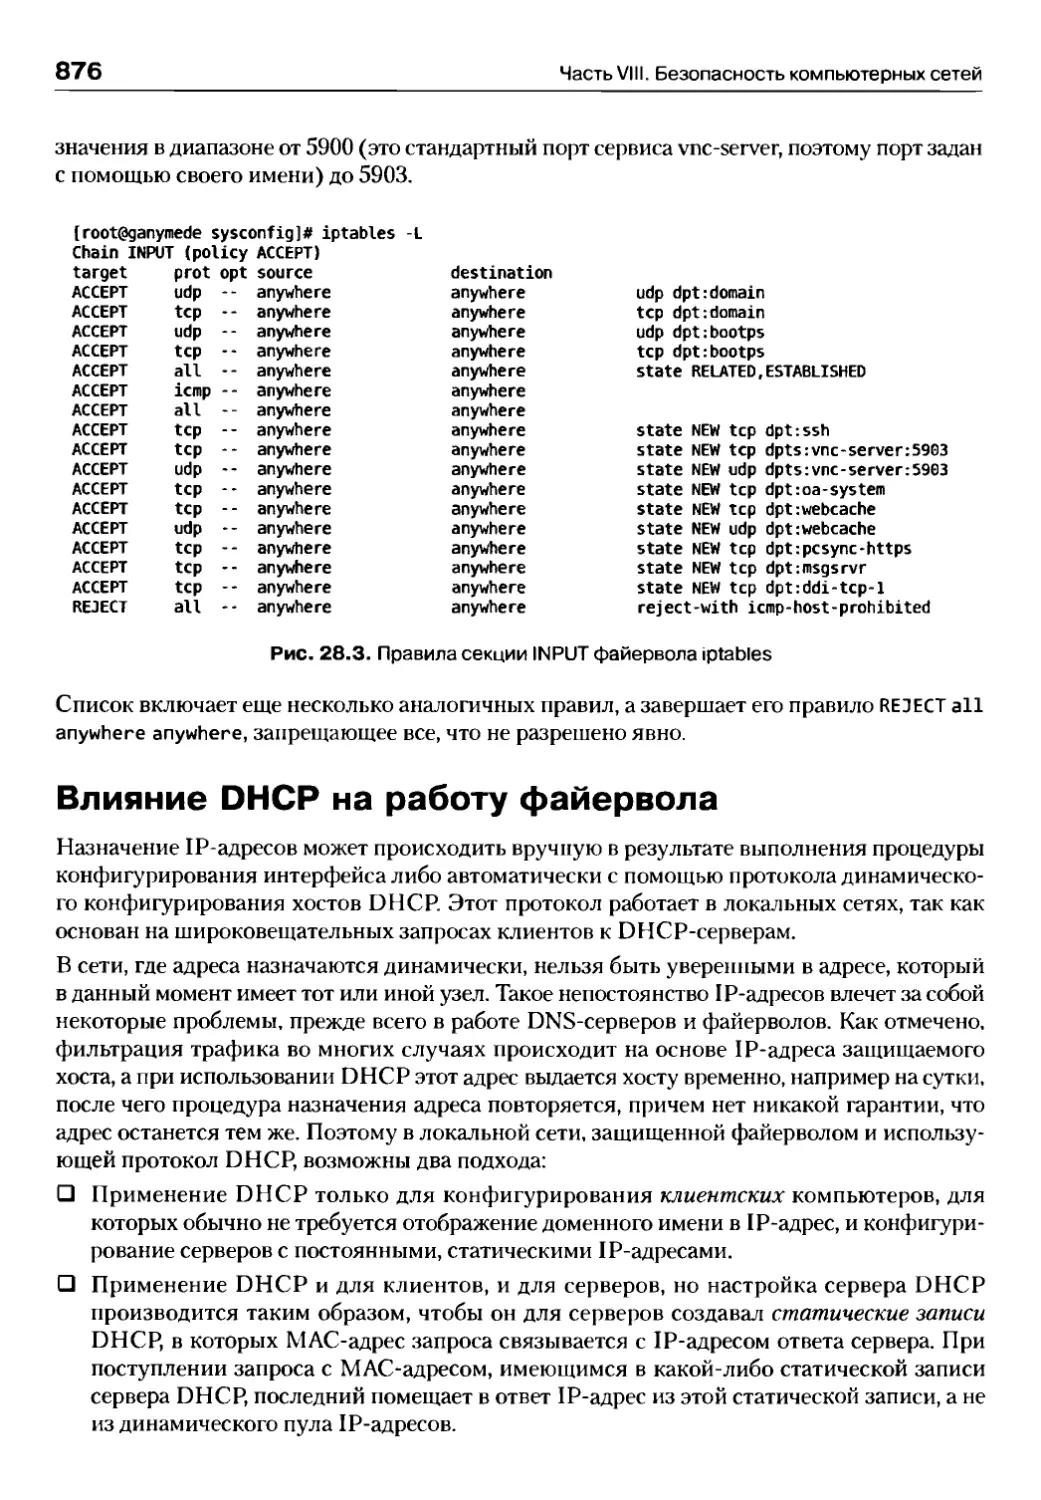 Влияние DHCP на работу файервола